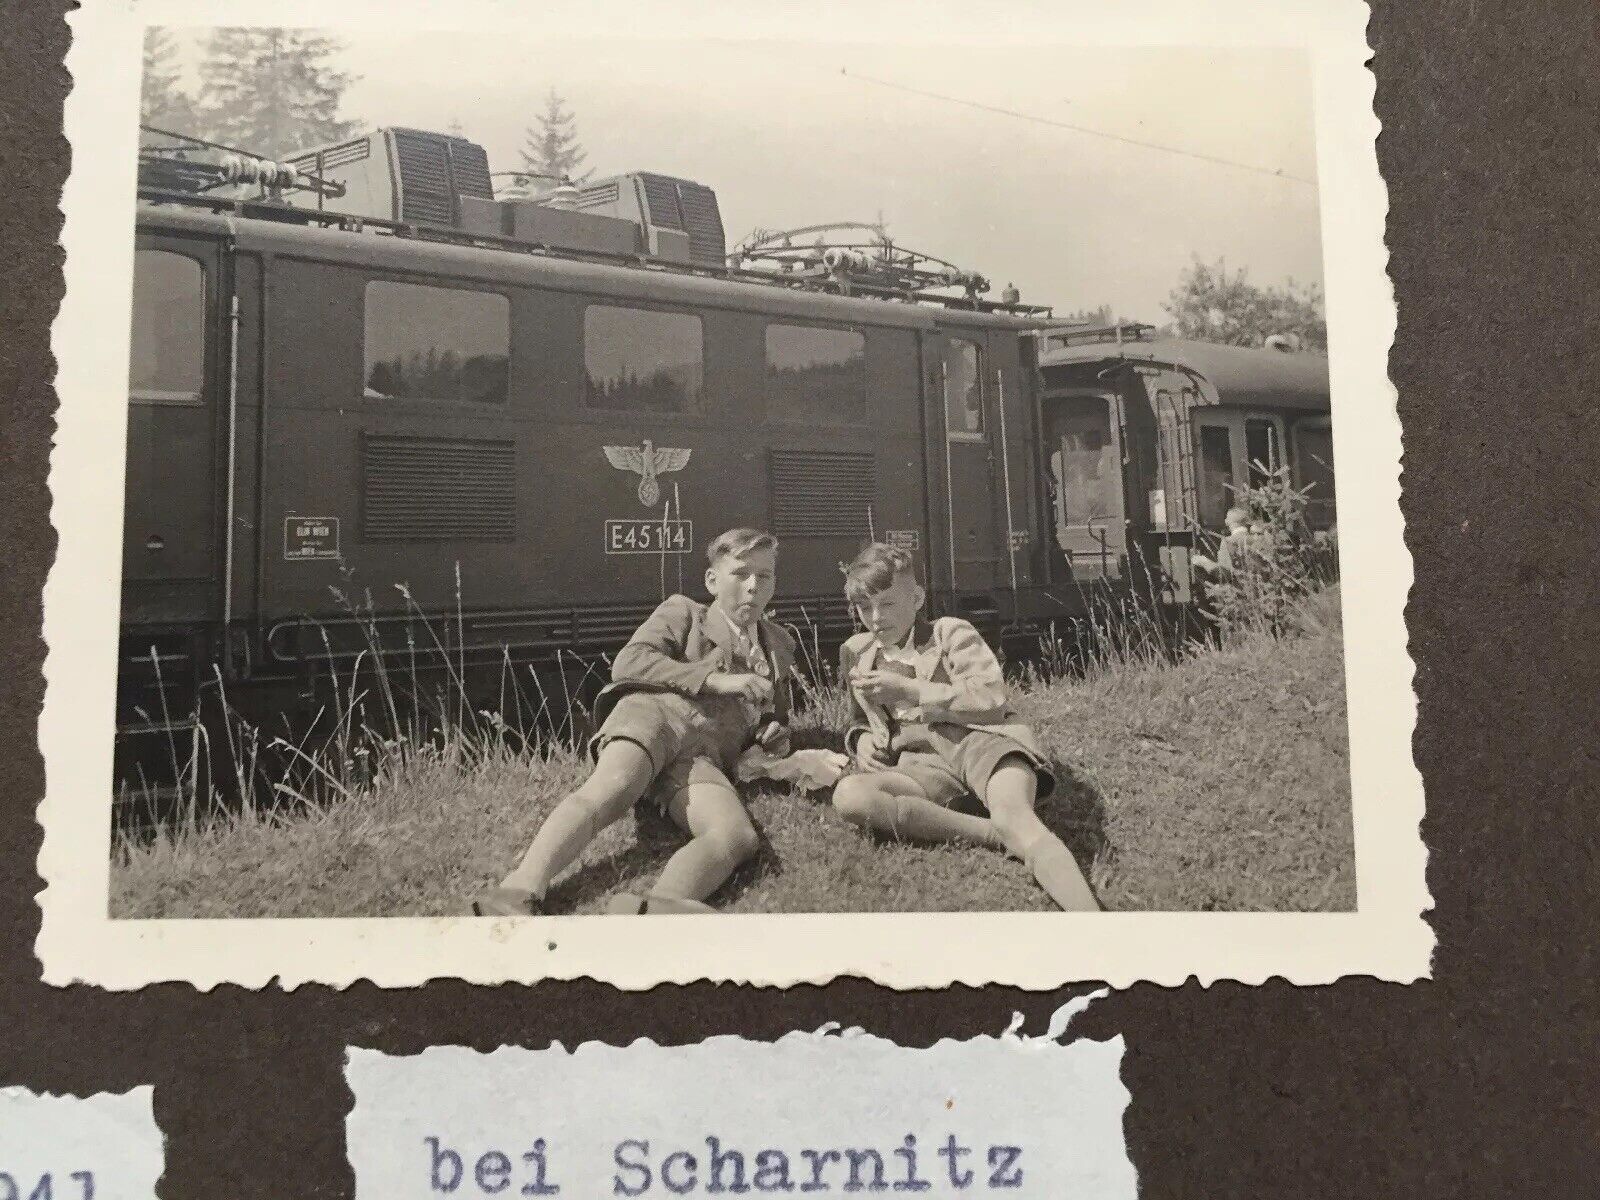 Vtg WWII Germany Austria Alps 1940s-1960s Family B&W Photographs Photo Album